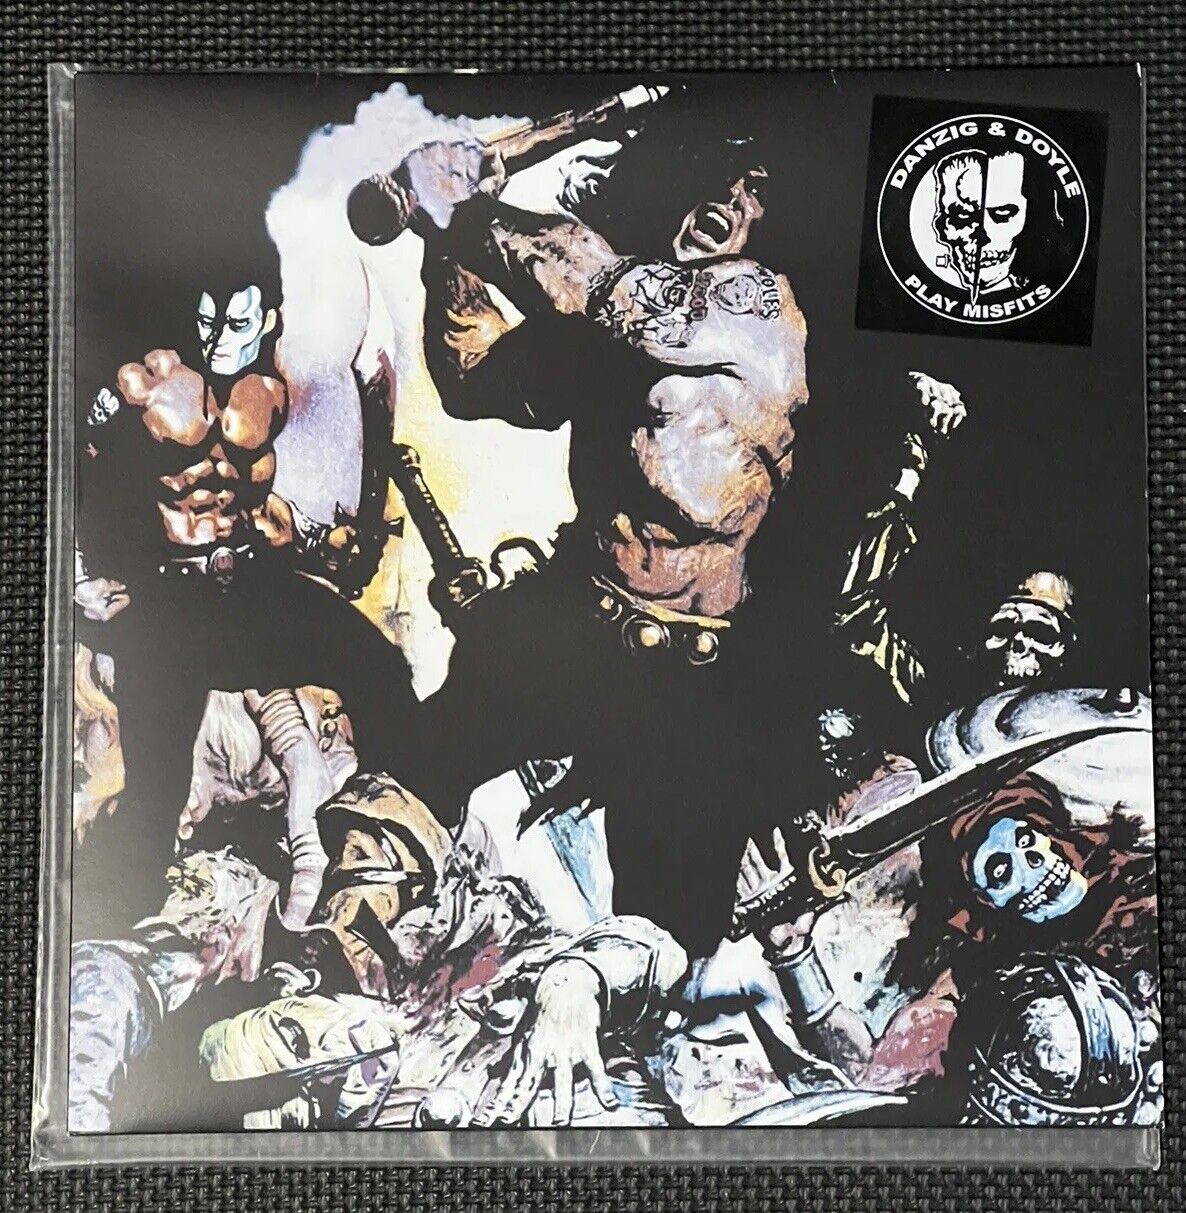 Danzig & Doyle - Play Misfits Vinyl Record LP Rare